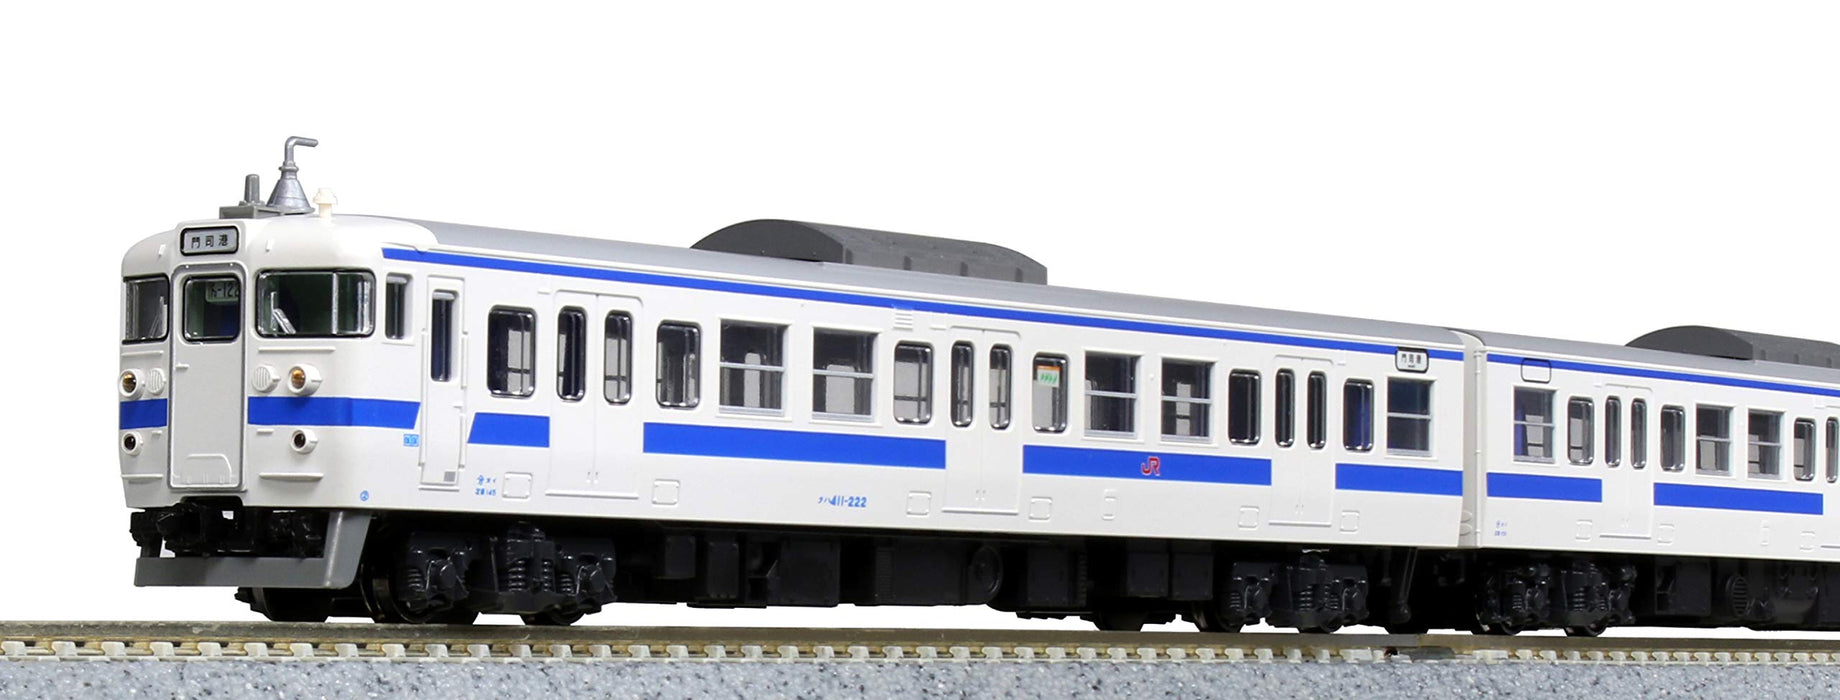 Kato N Gauge 415 Série 4-Car Railway Model Train Set Kyushu Couleur 10-1538